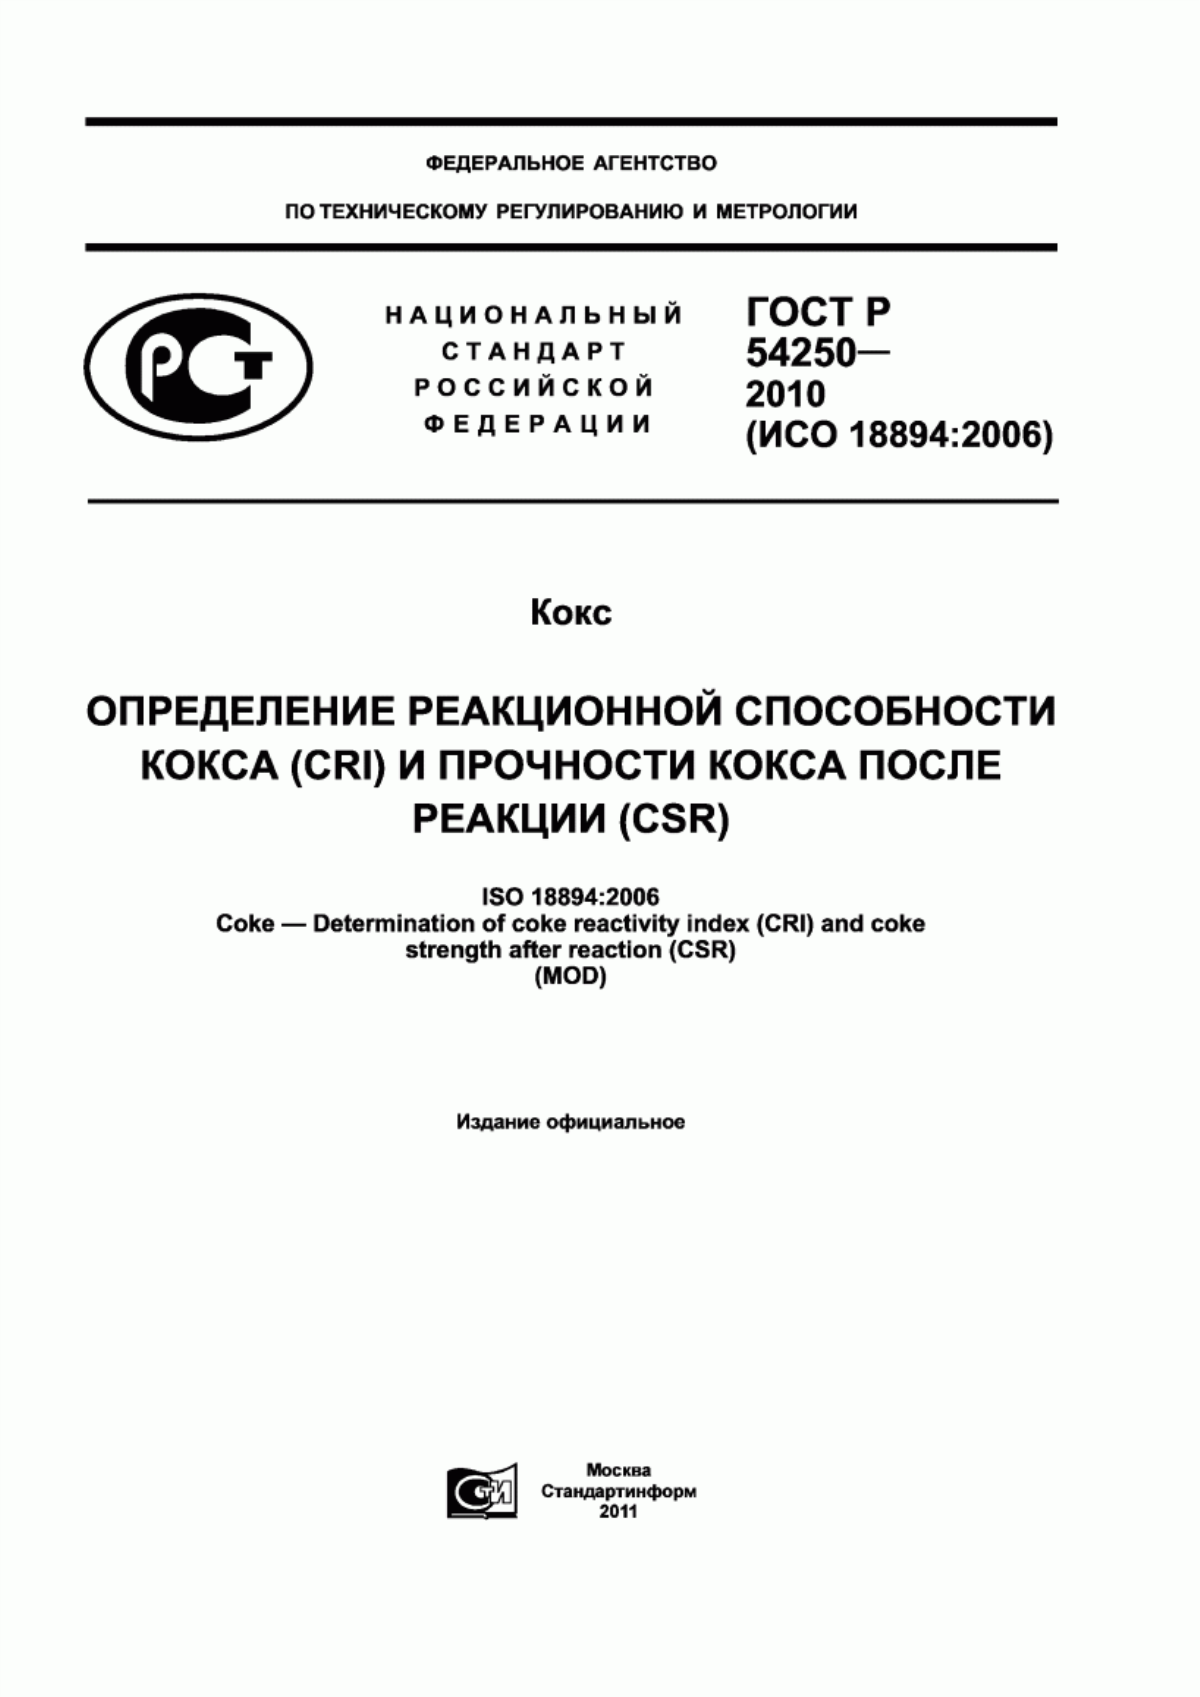 ГОСТ Р 54250-2010 Кокс. Определение реакционной способности кокса (CRI) и прочности кокса после реакции (CSR)